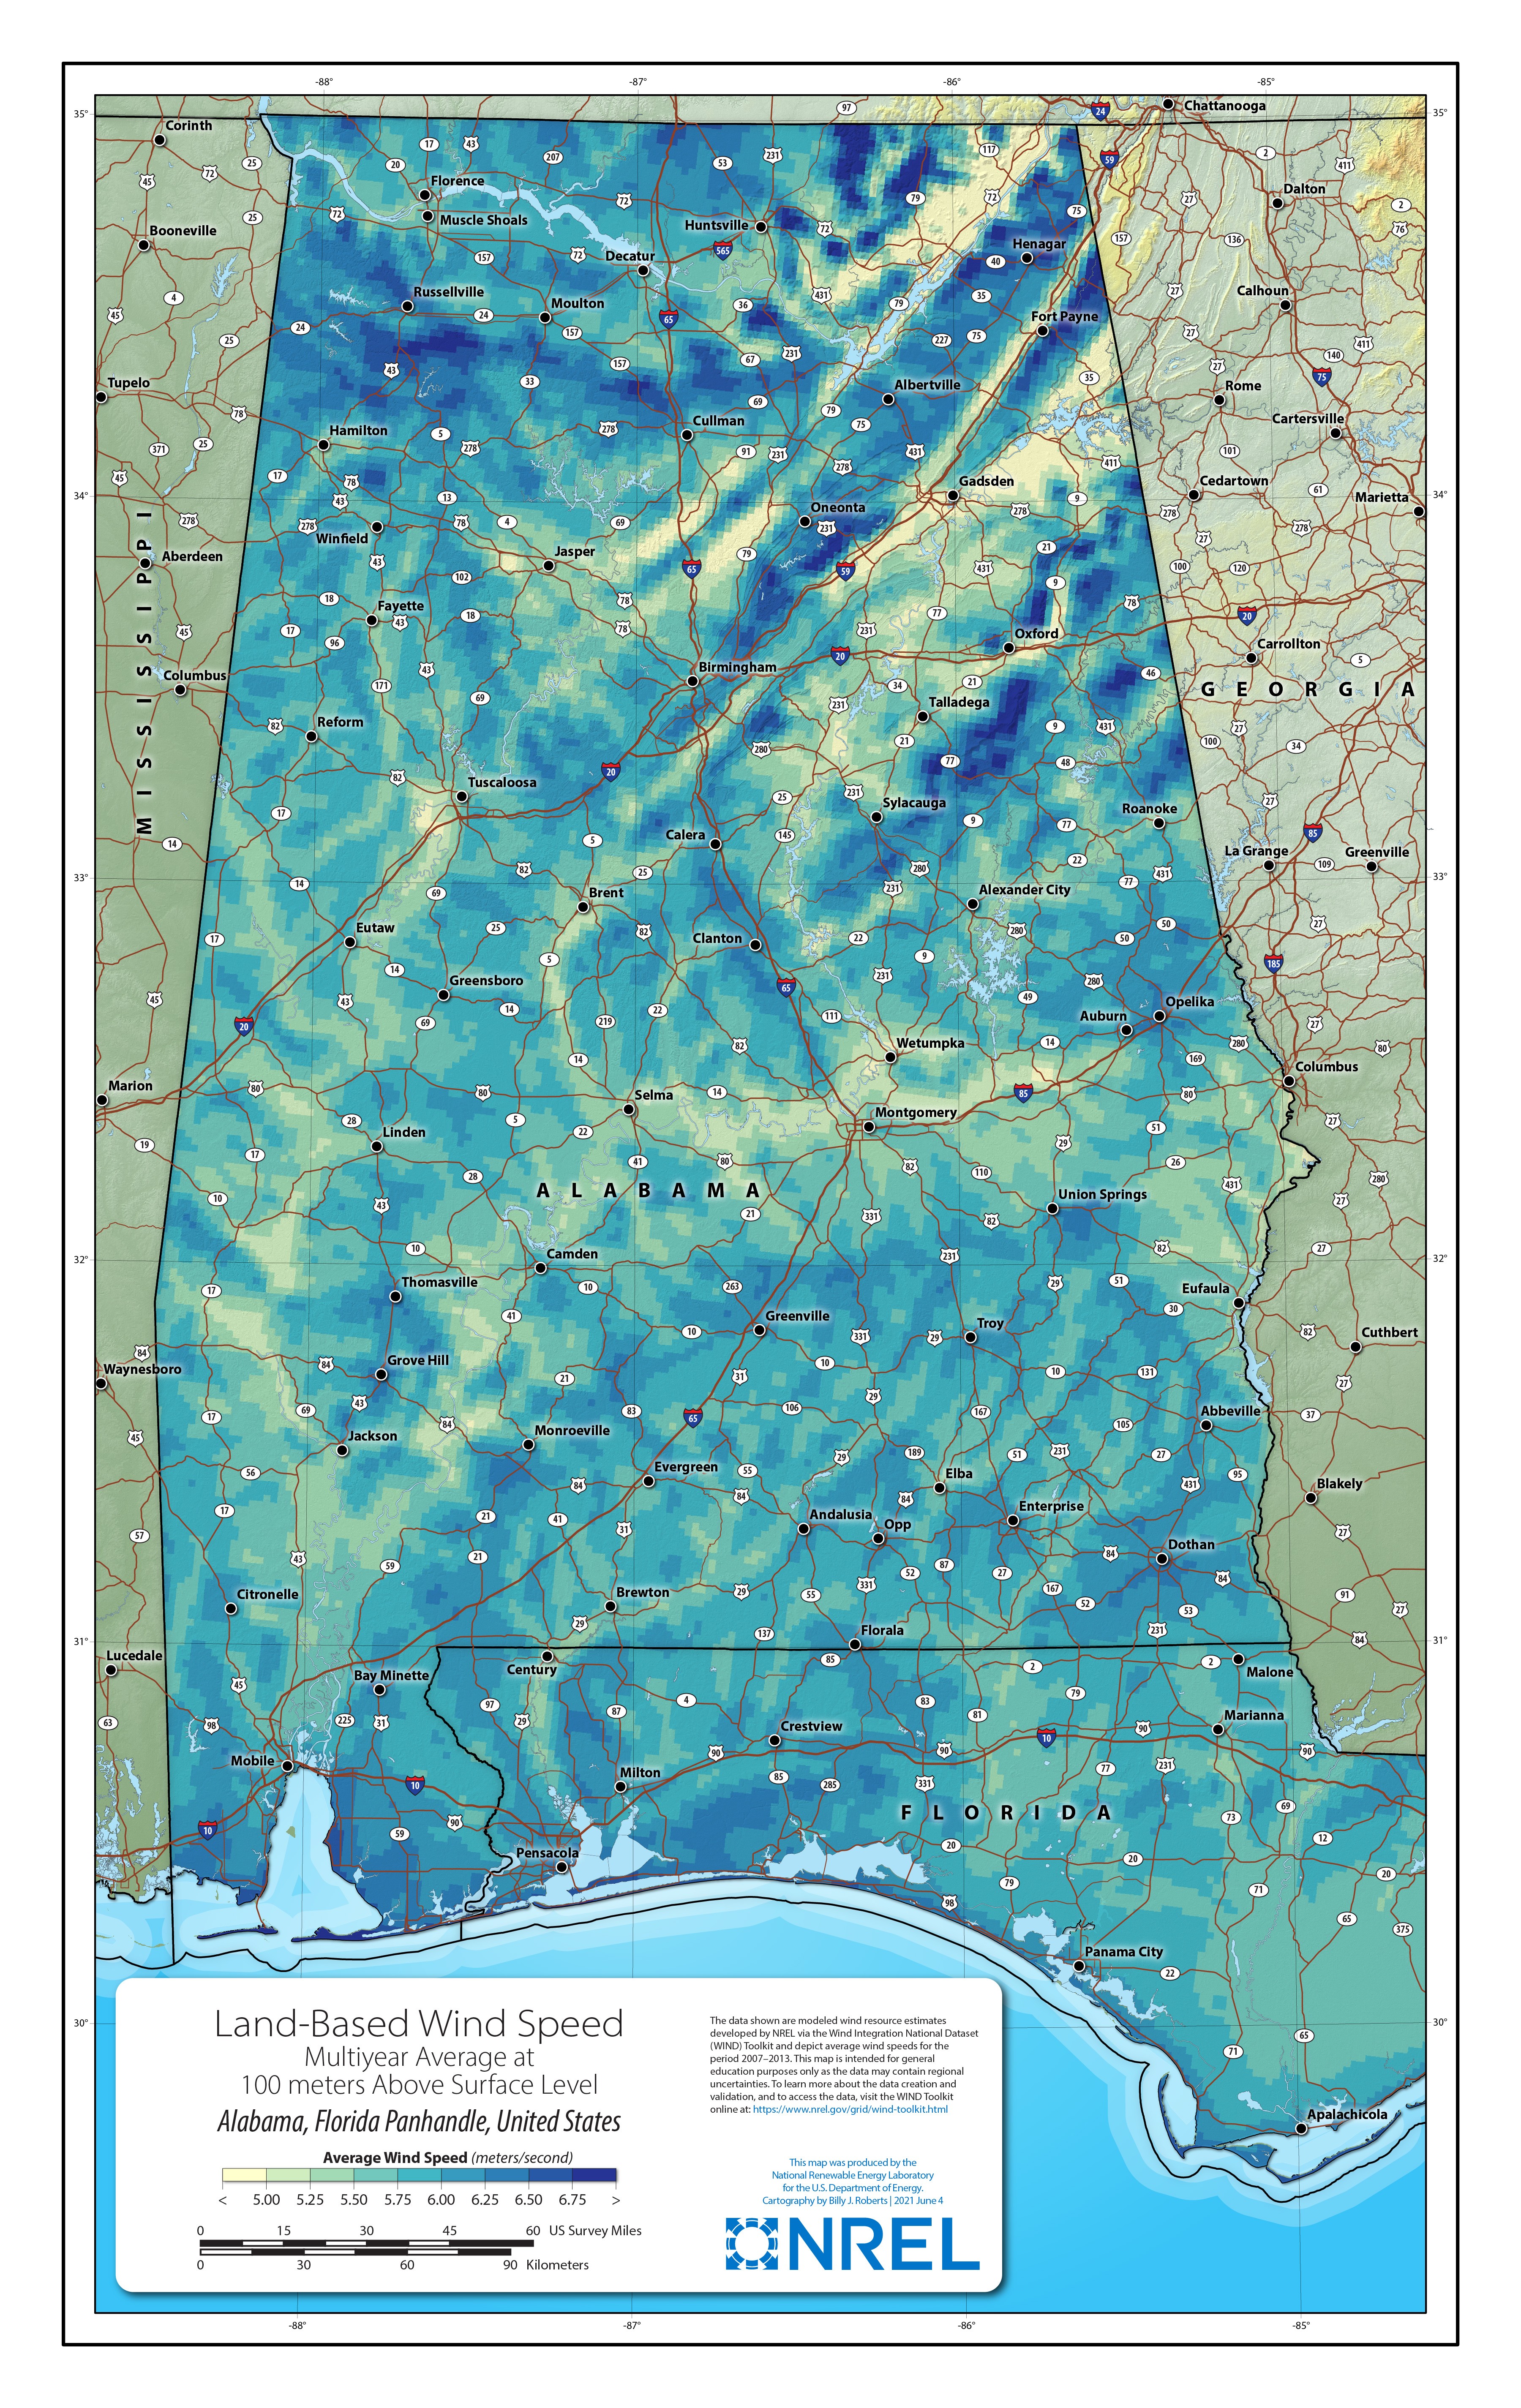 Alabama and Florida Panhandle Land-Based Wind Speed at 100 Meters